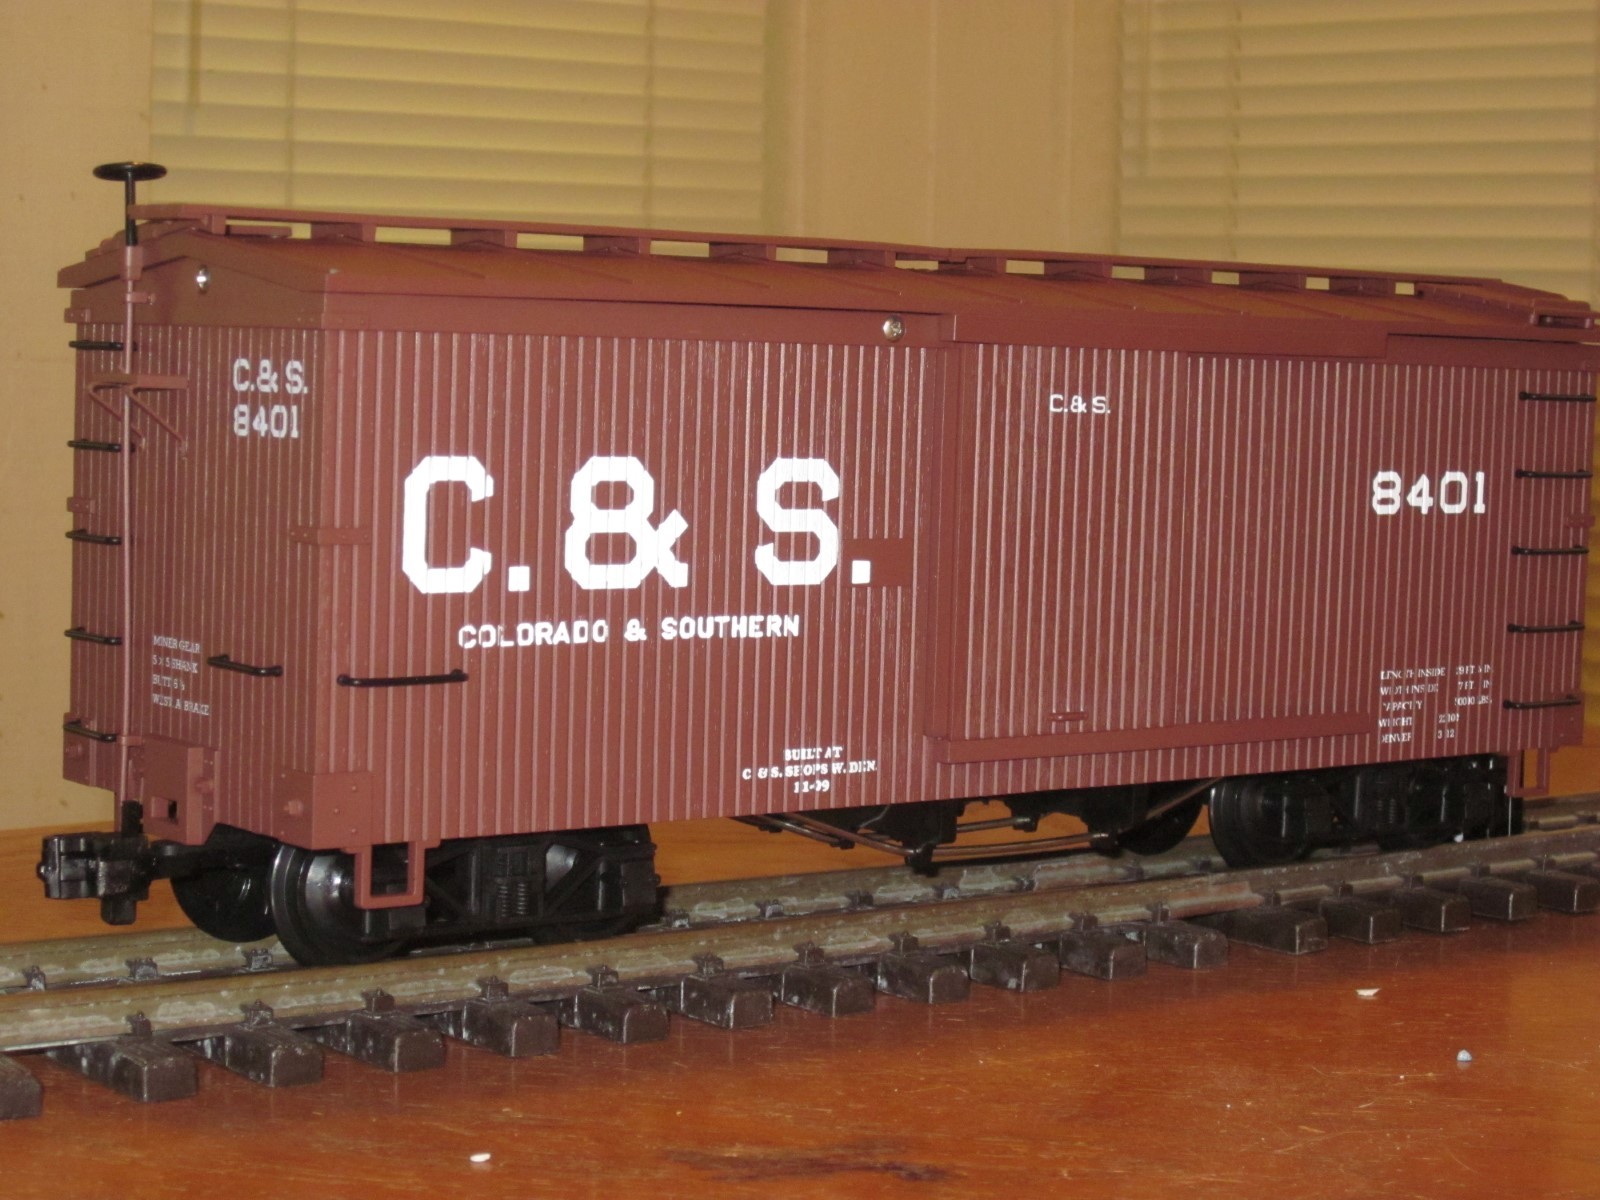 R1977Au Colorado&Southern C&S 8401